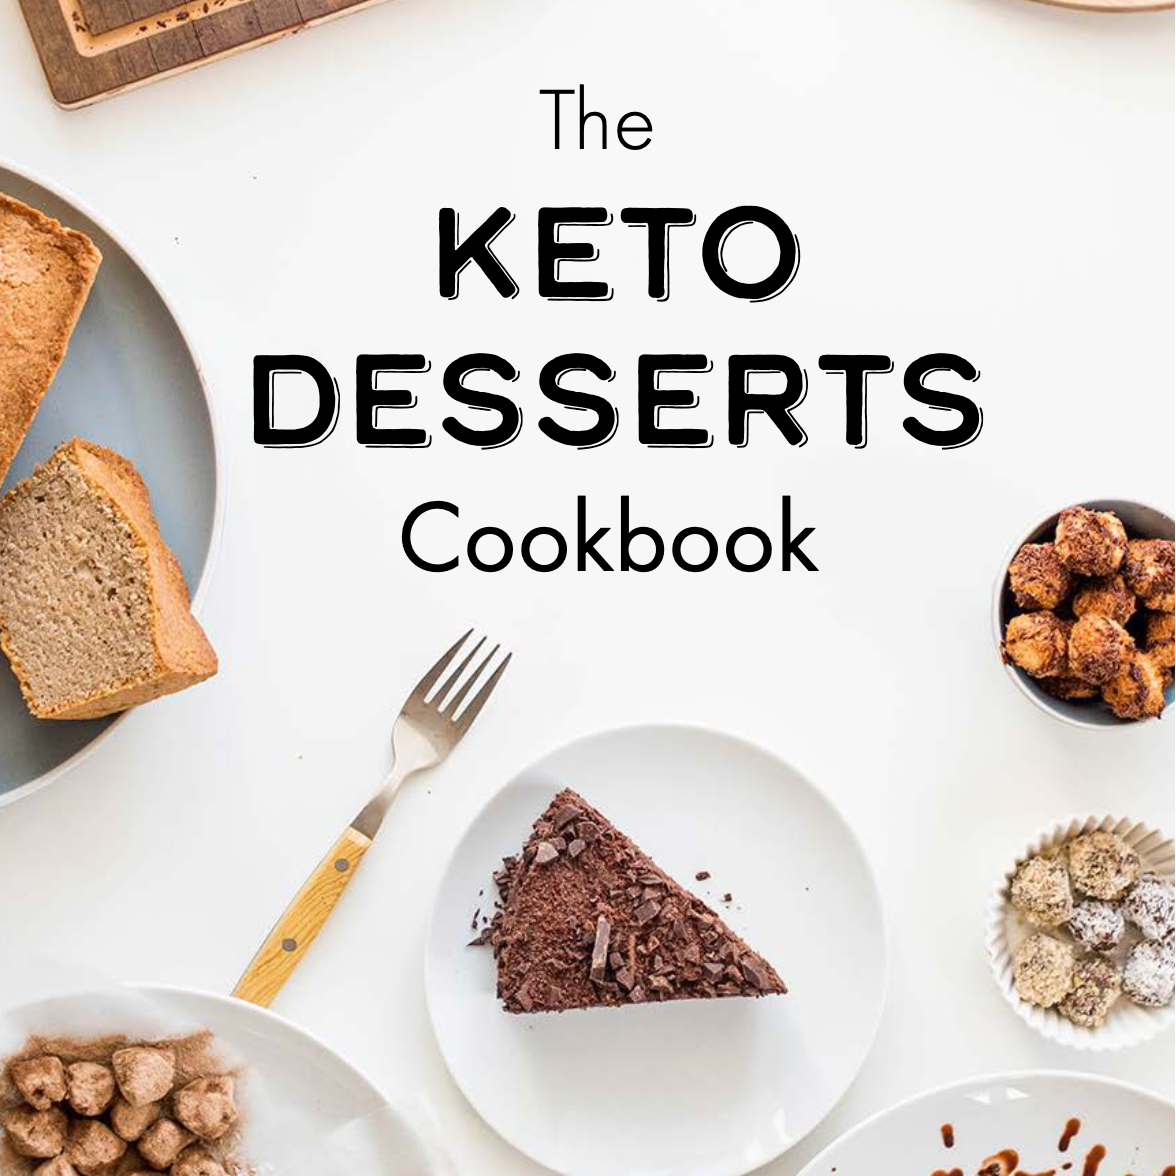 The Keto Desserts Cookbook